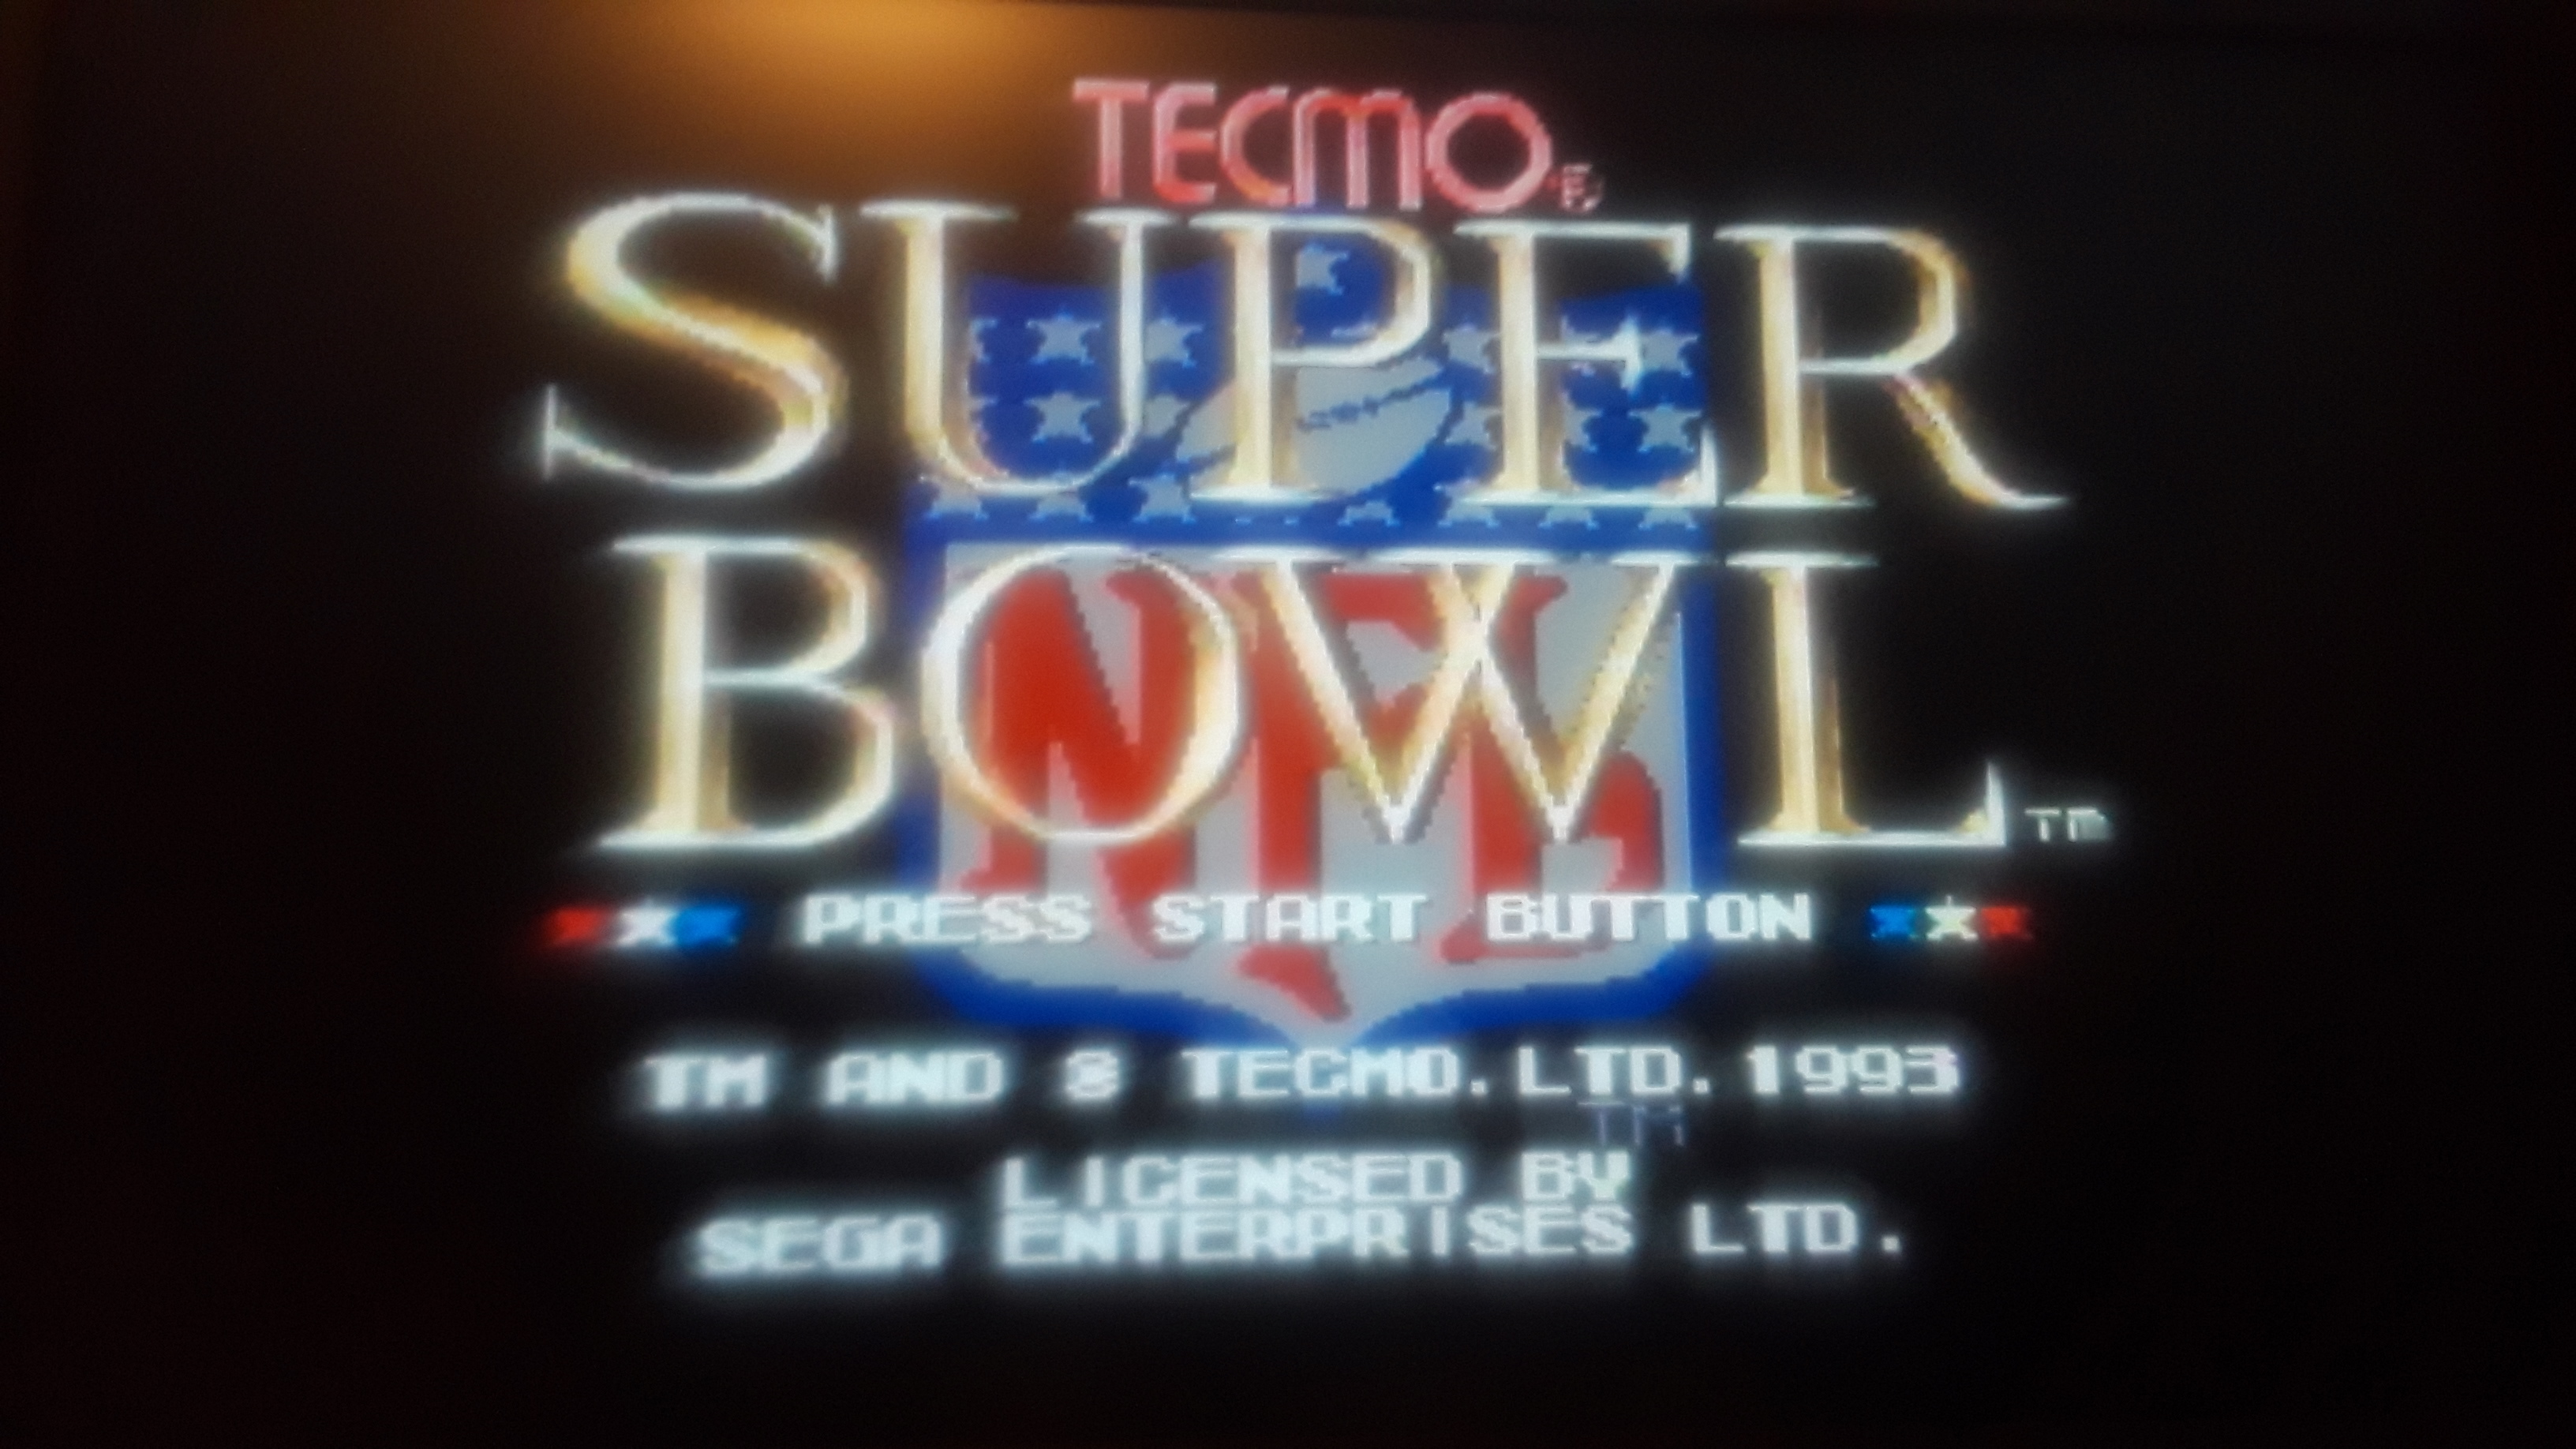 JML101582: Tecmo Super Bowl [Most Rushing Yards] [Preseason] (Sega Genesis / MegaDrive Emulated) 543 points on 2019-09-05 18:17:11